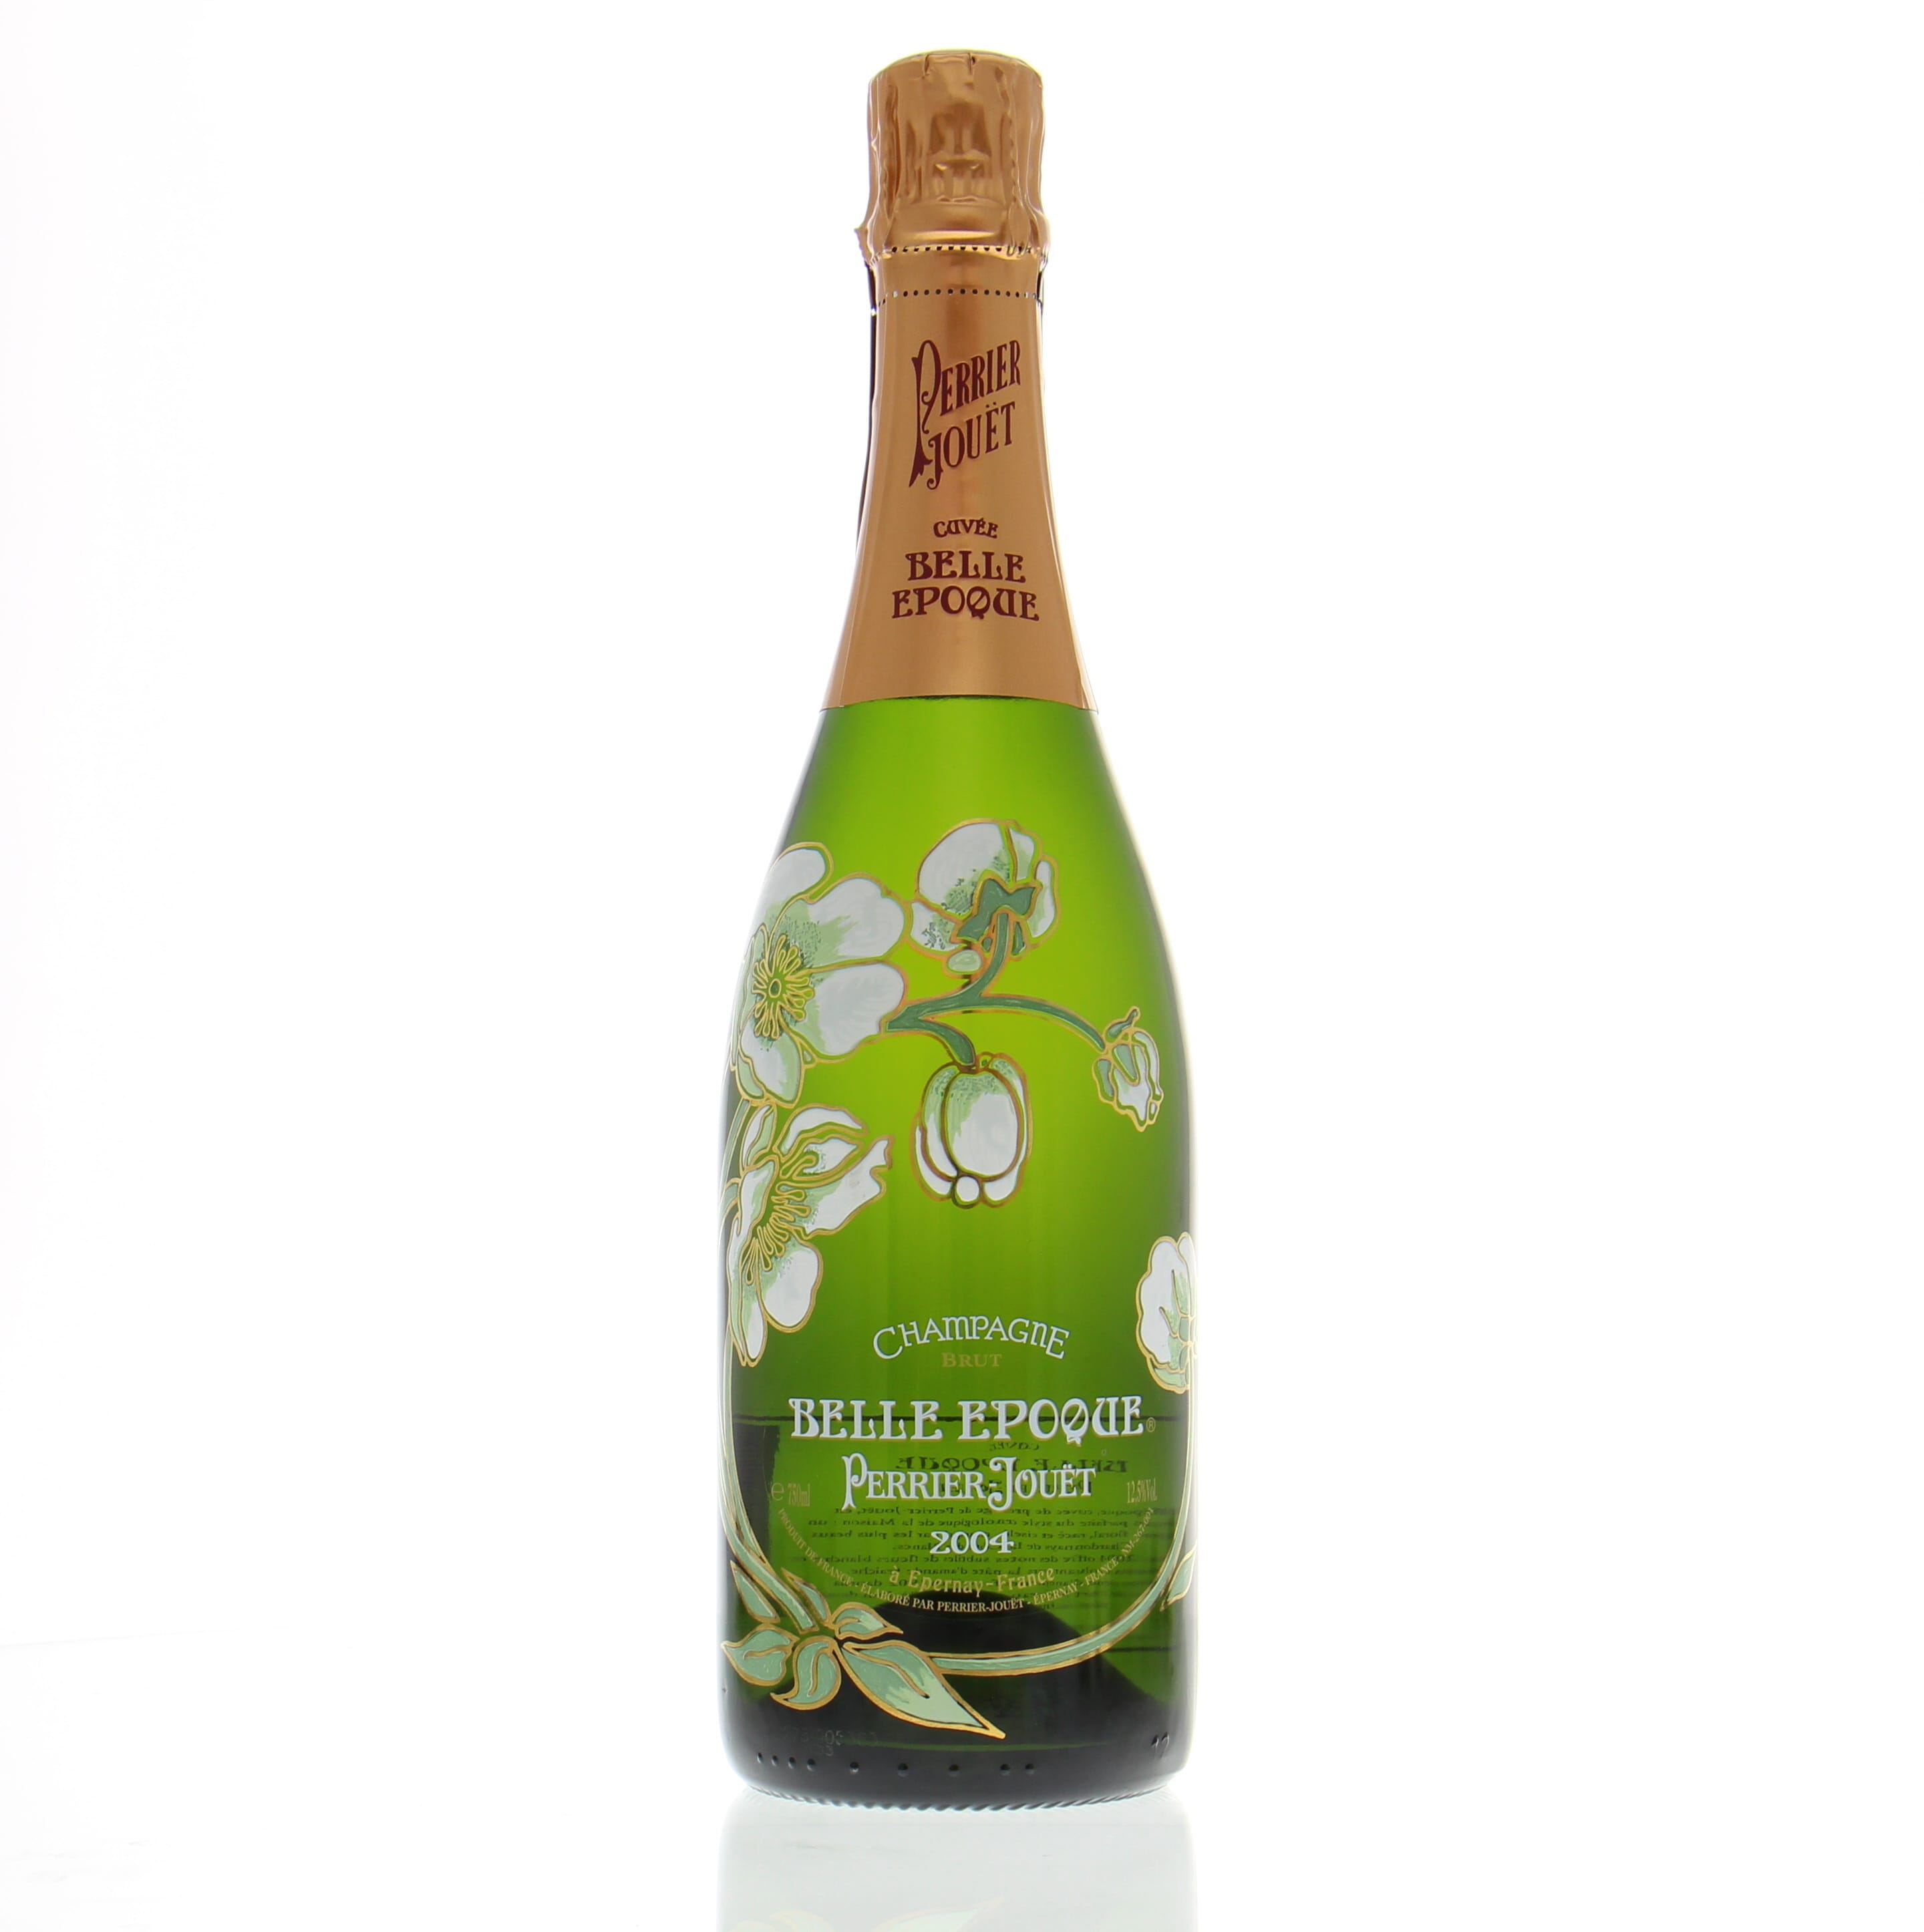 Perrier Jouet - Champagne Belle Epoque 2004